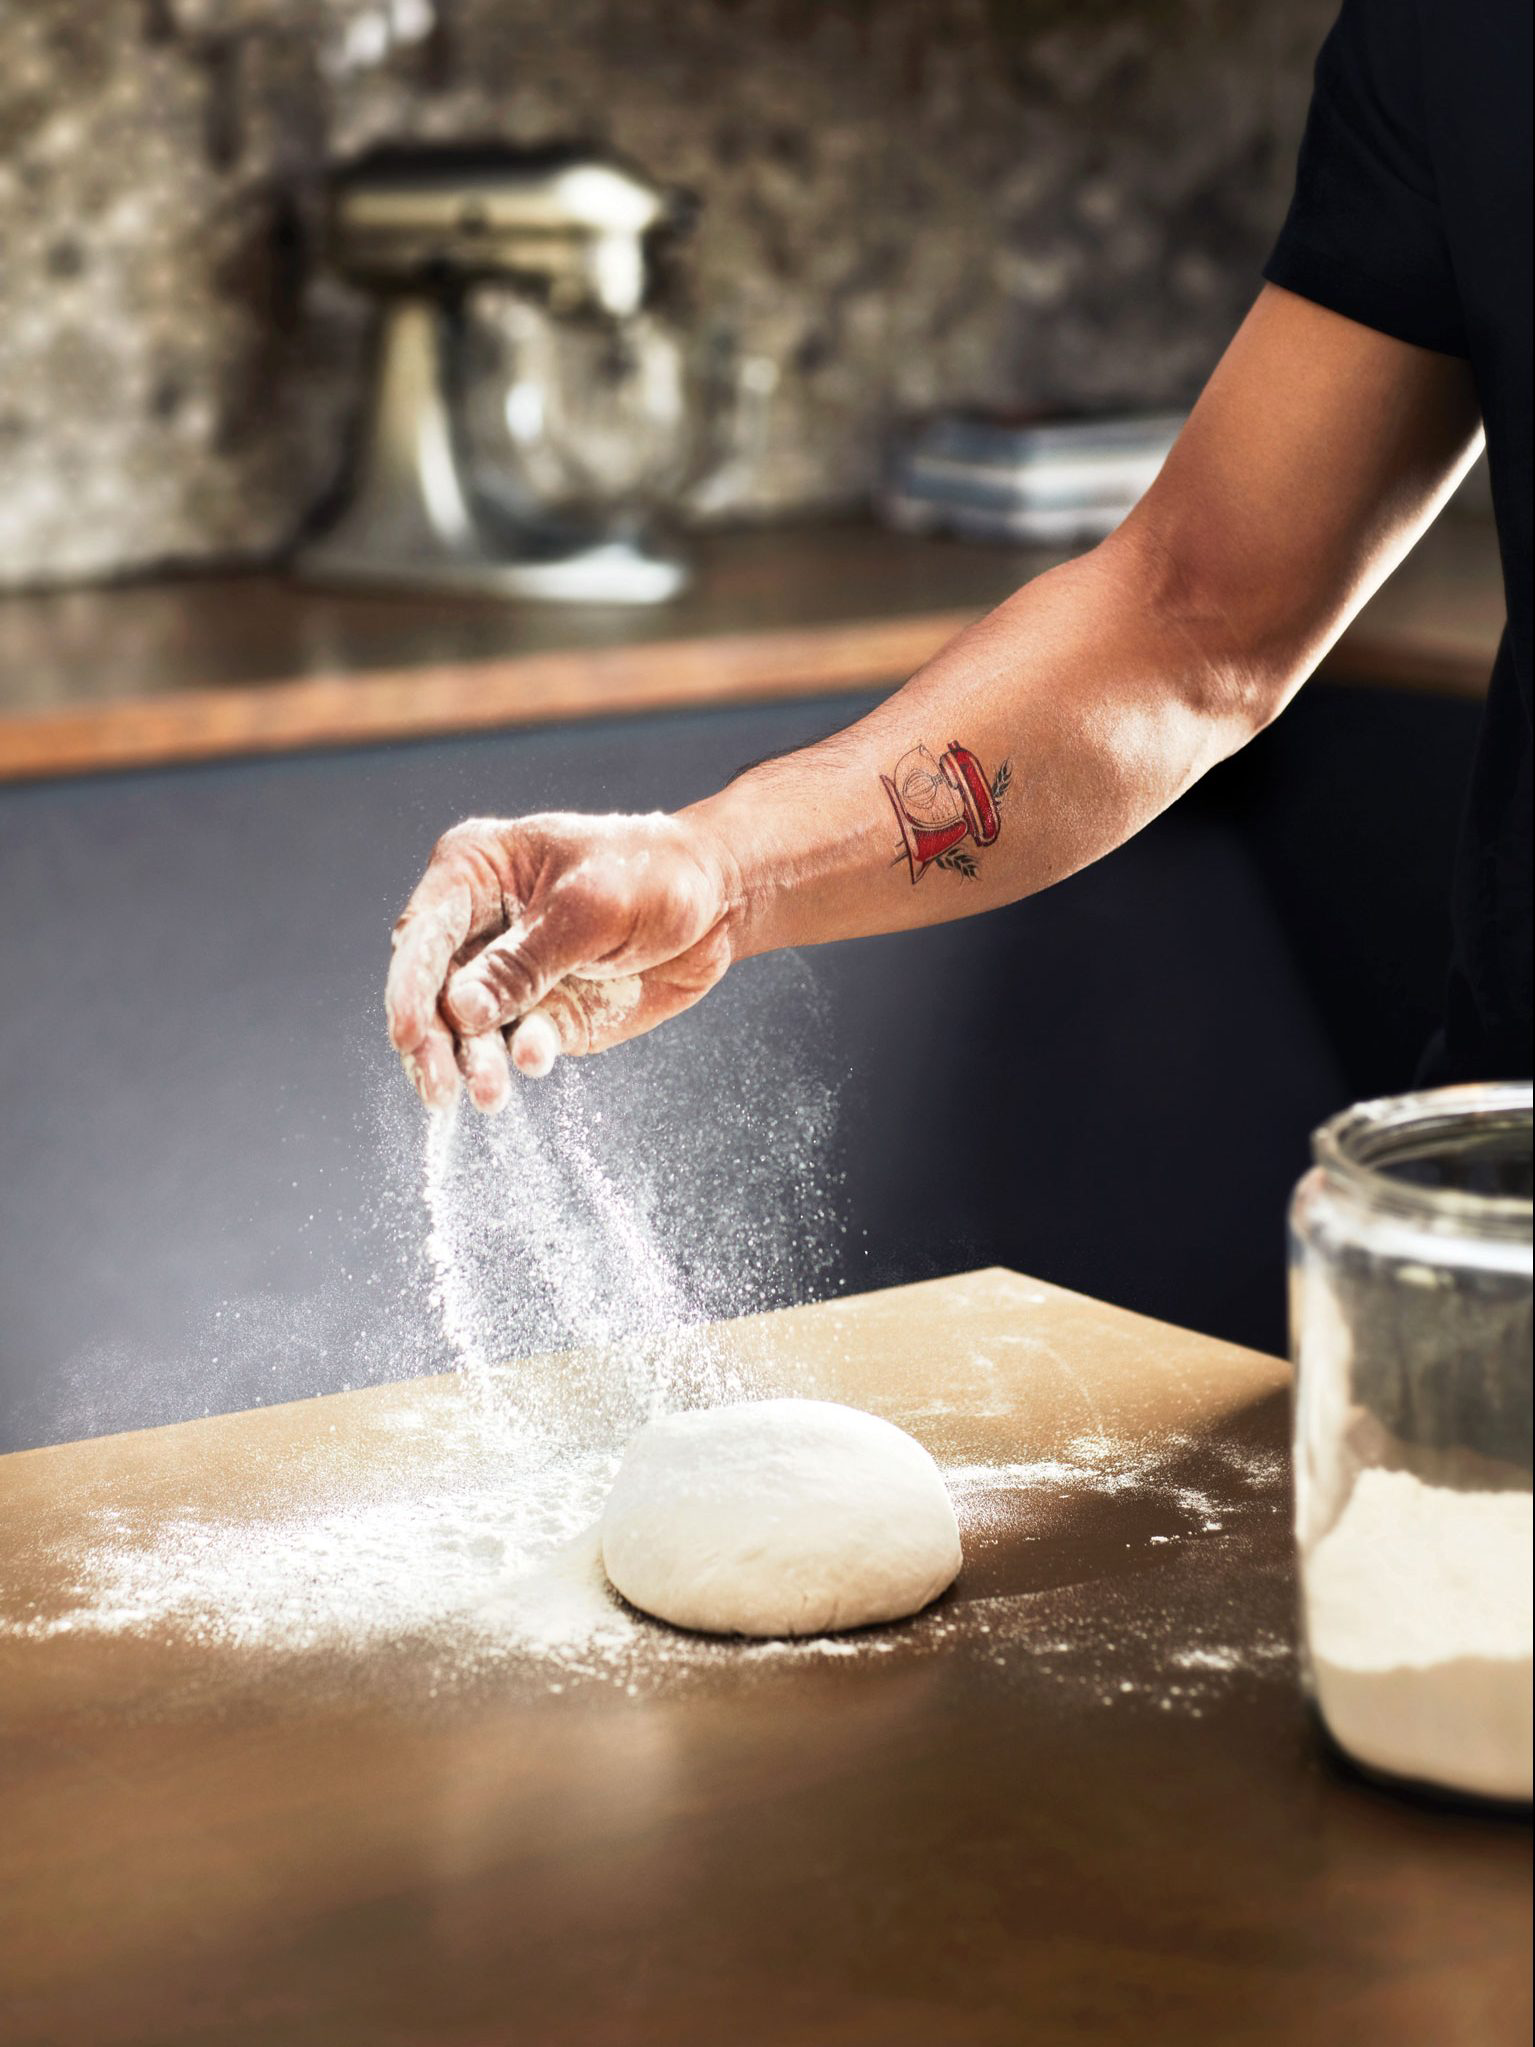 A person sprinkling flour on fresh dough.